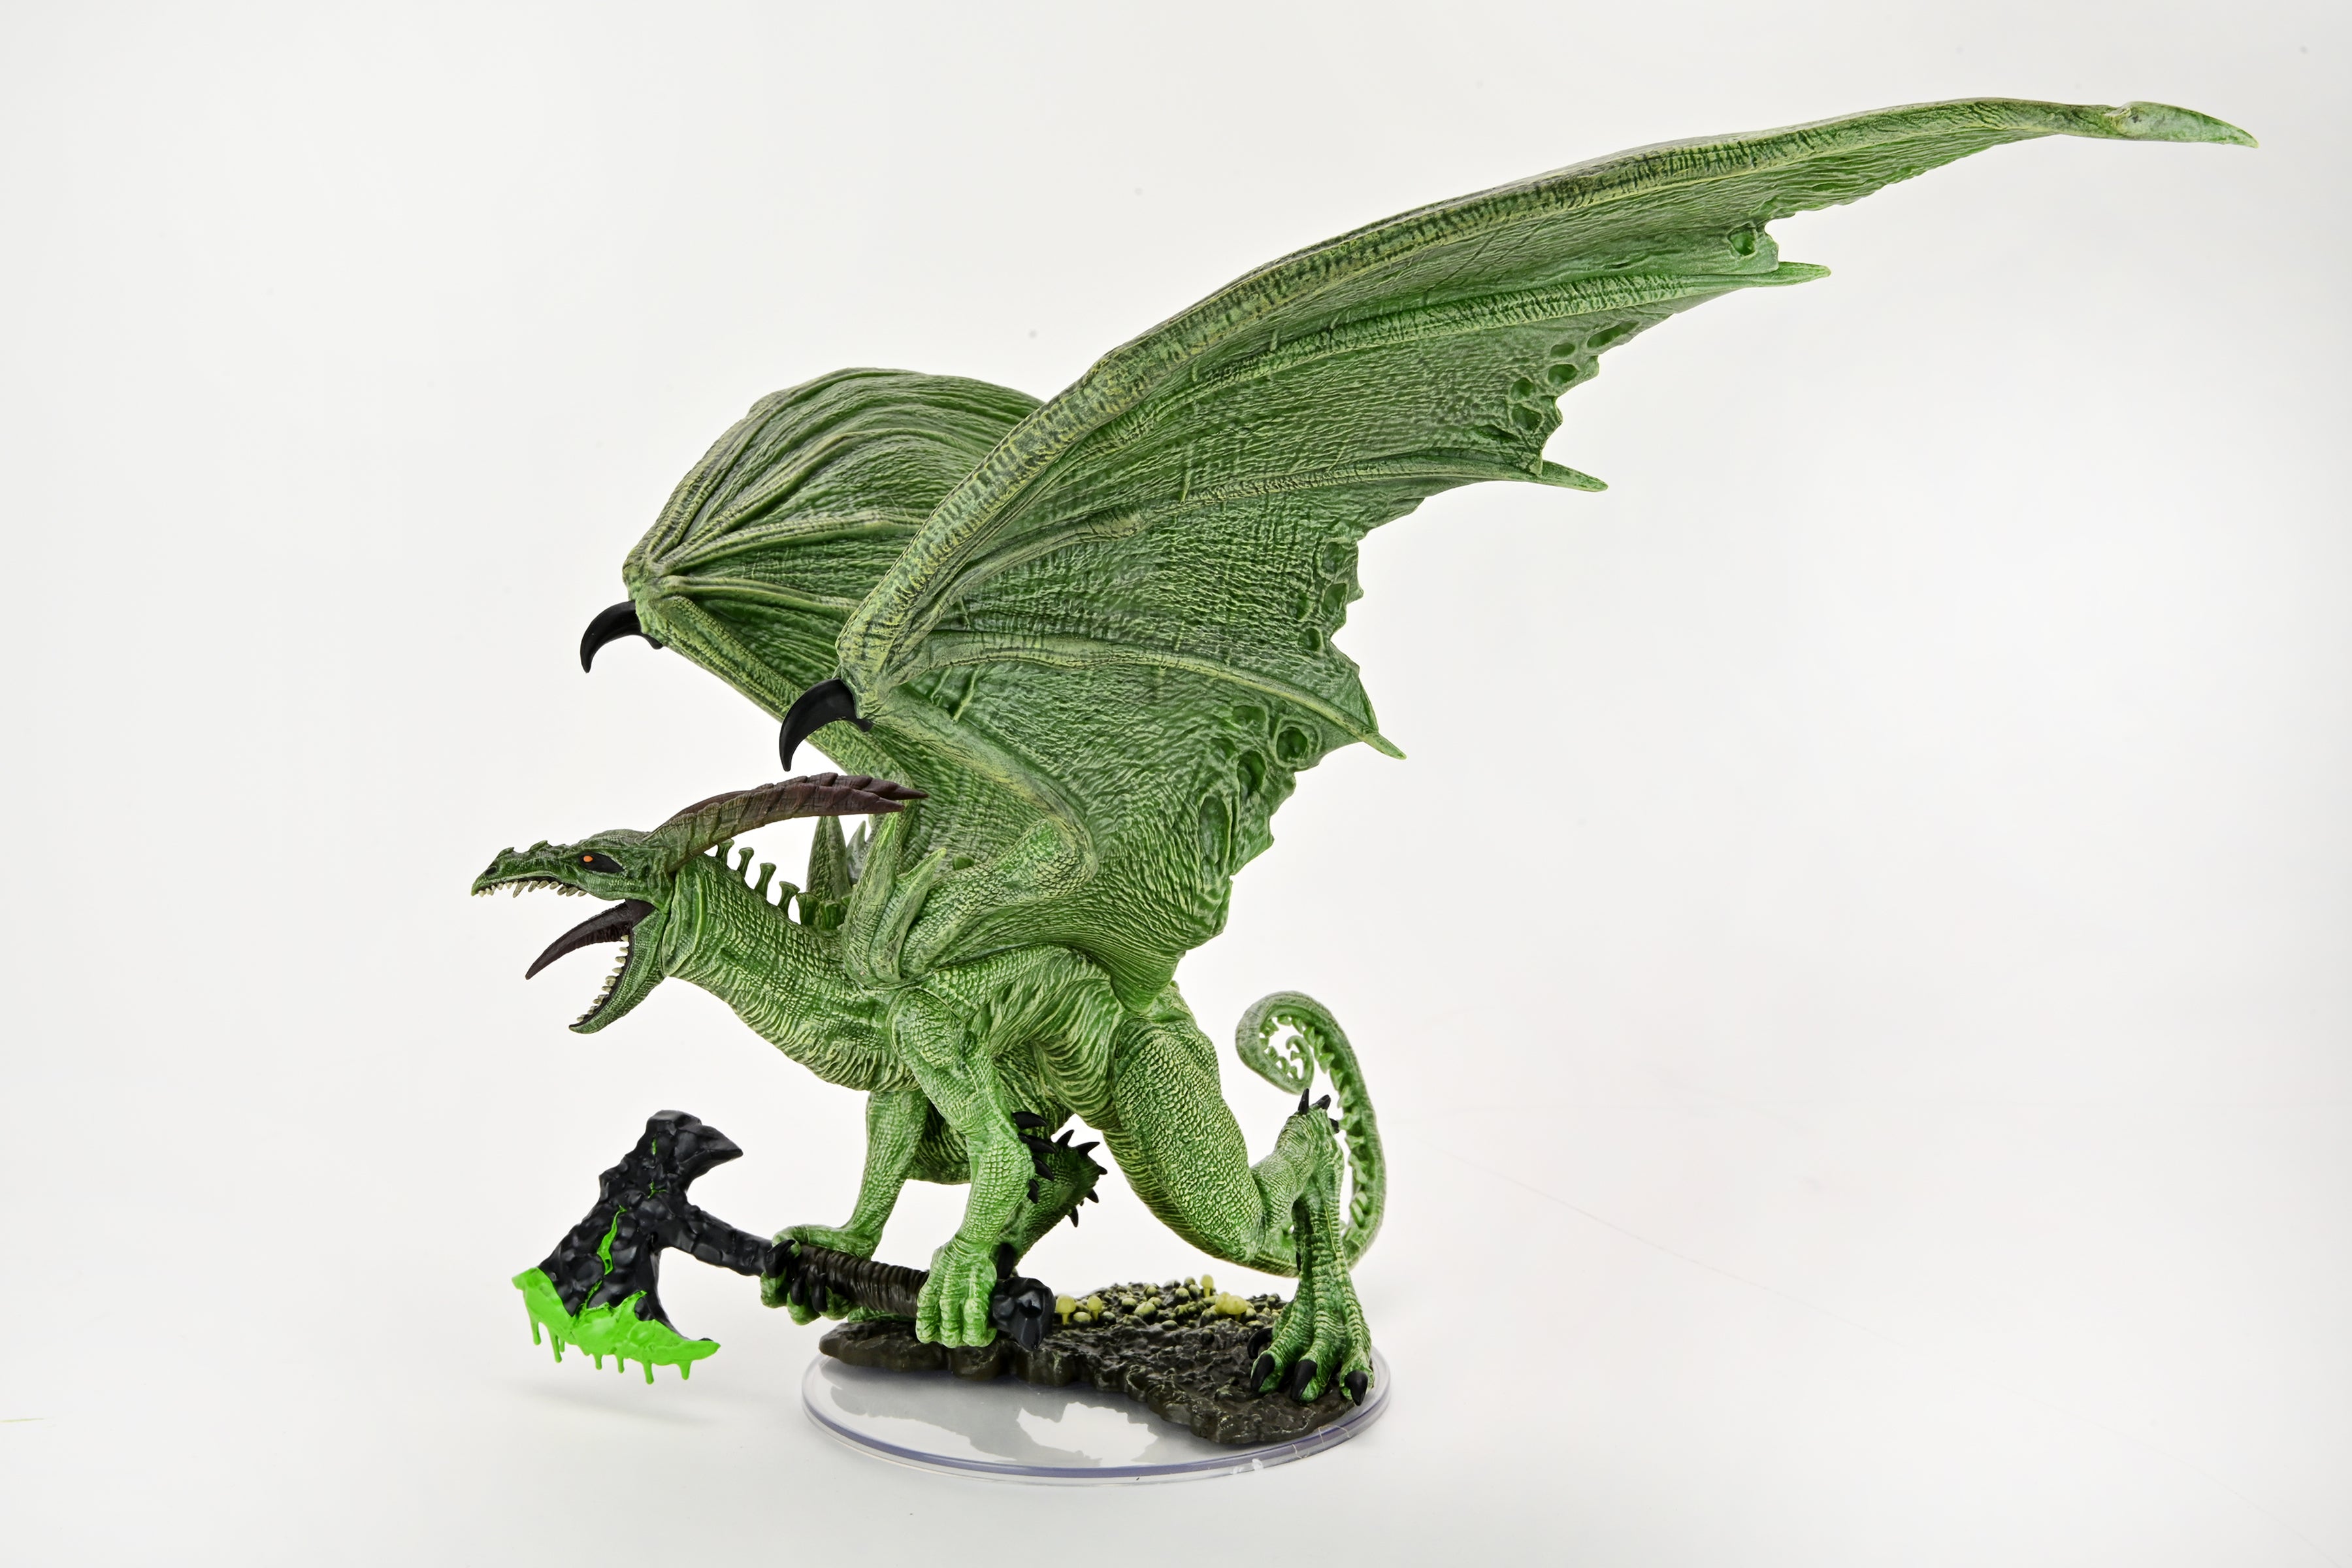 Mini figure of Tree Razer, a green dragon wielding a large axe